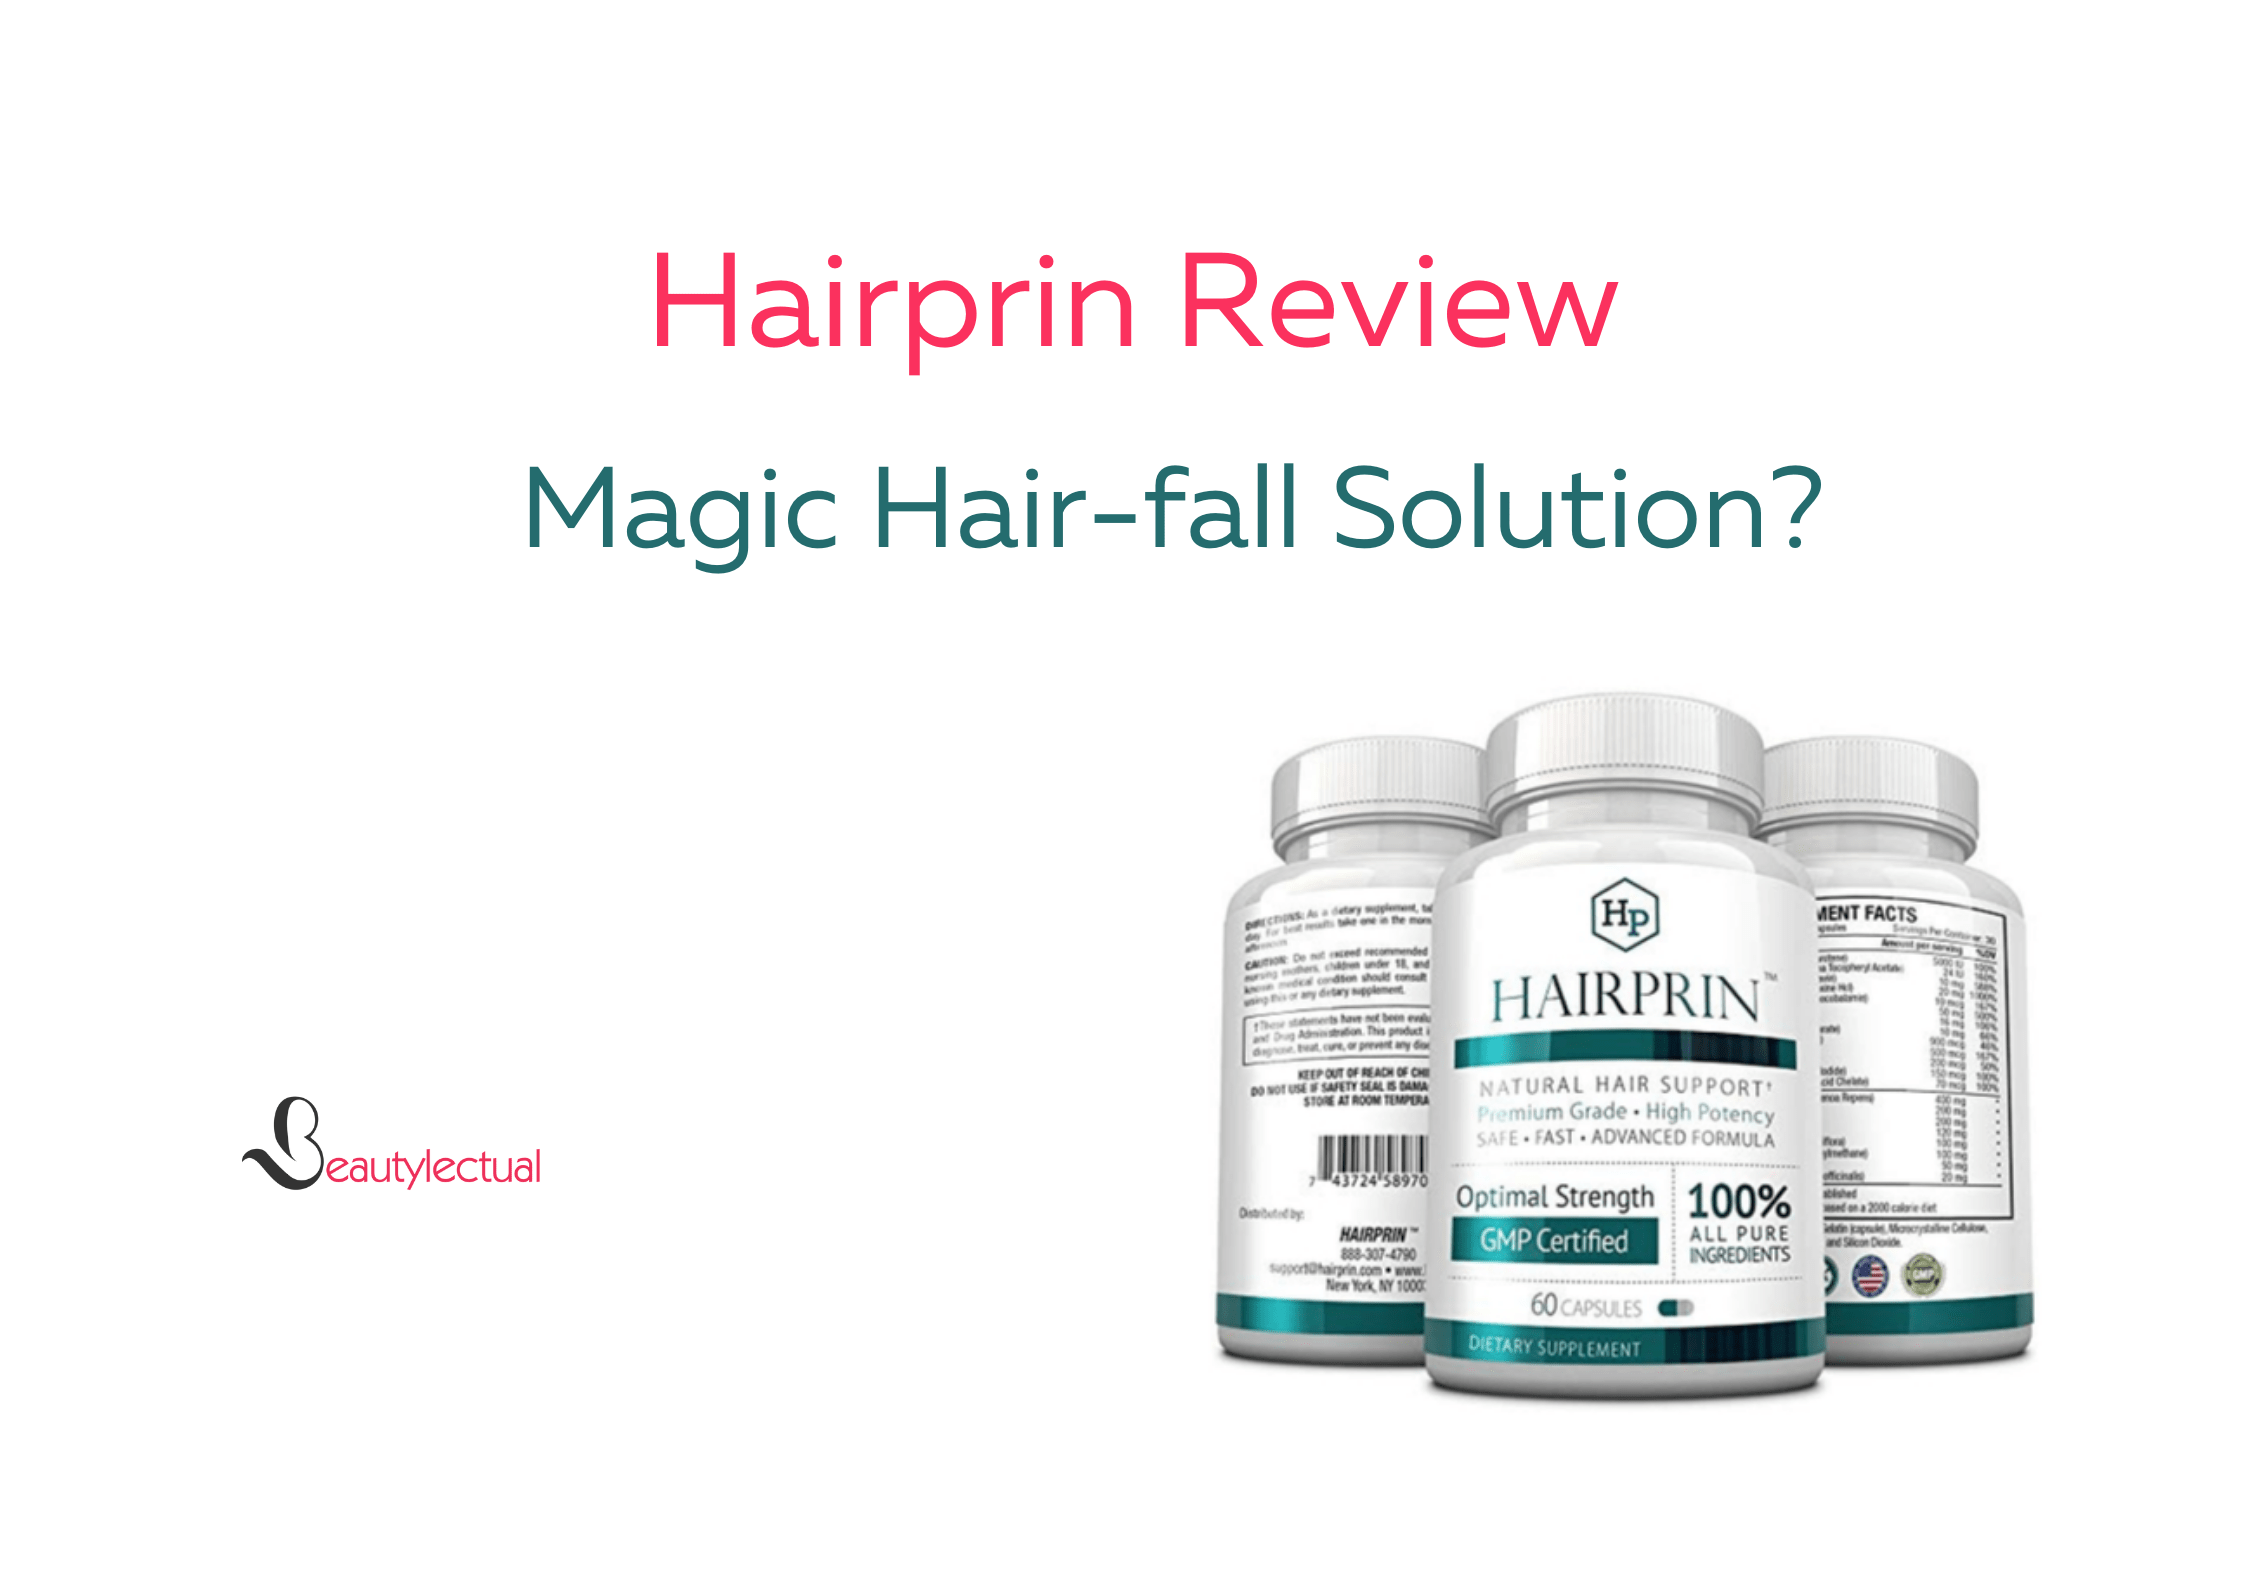 Hairprin Reviews